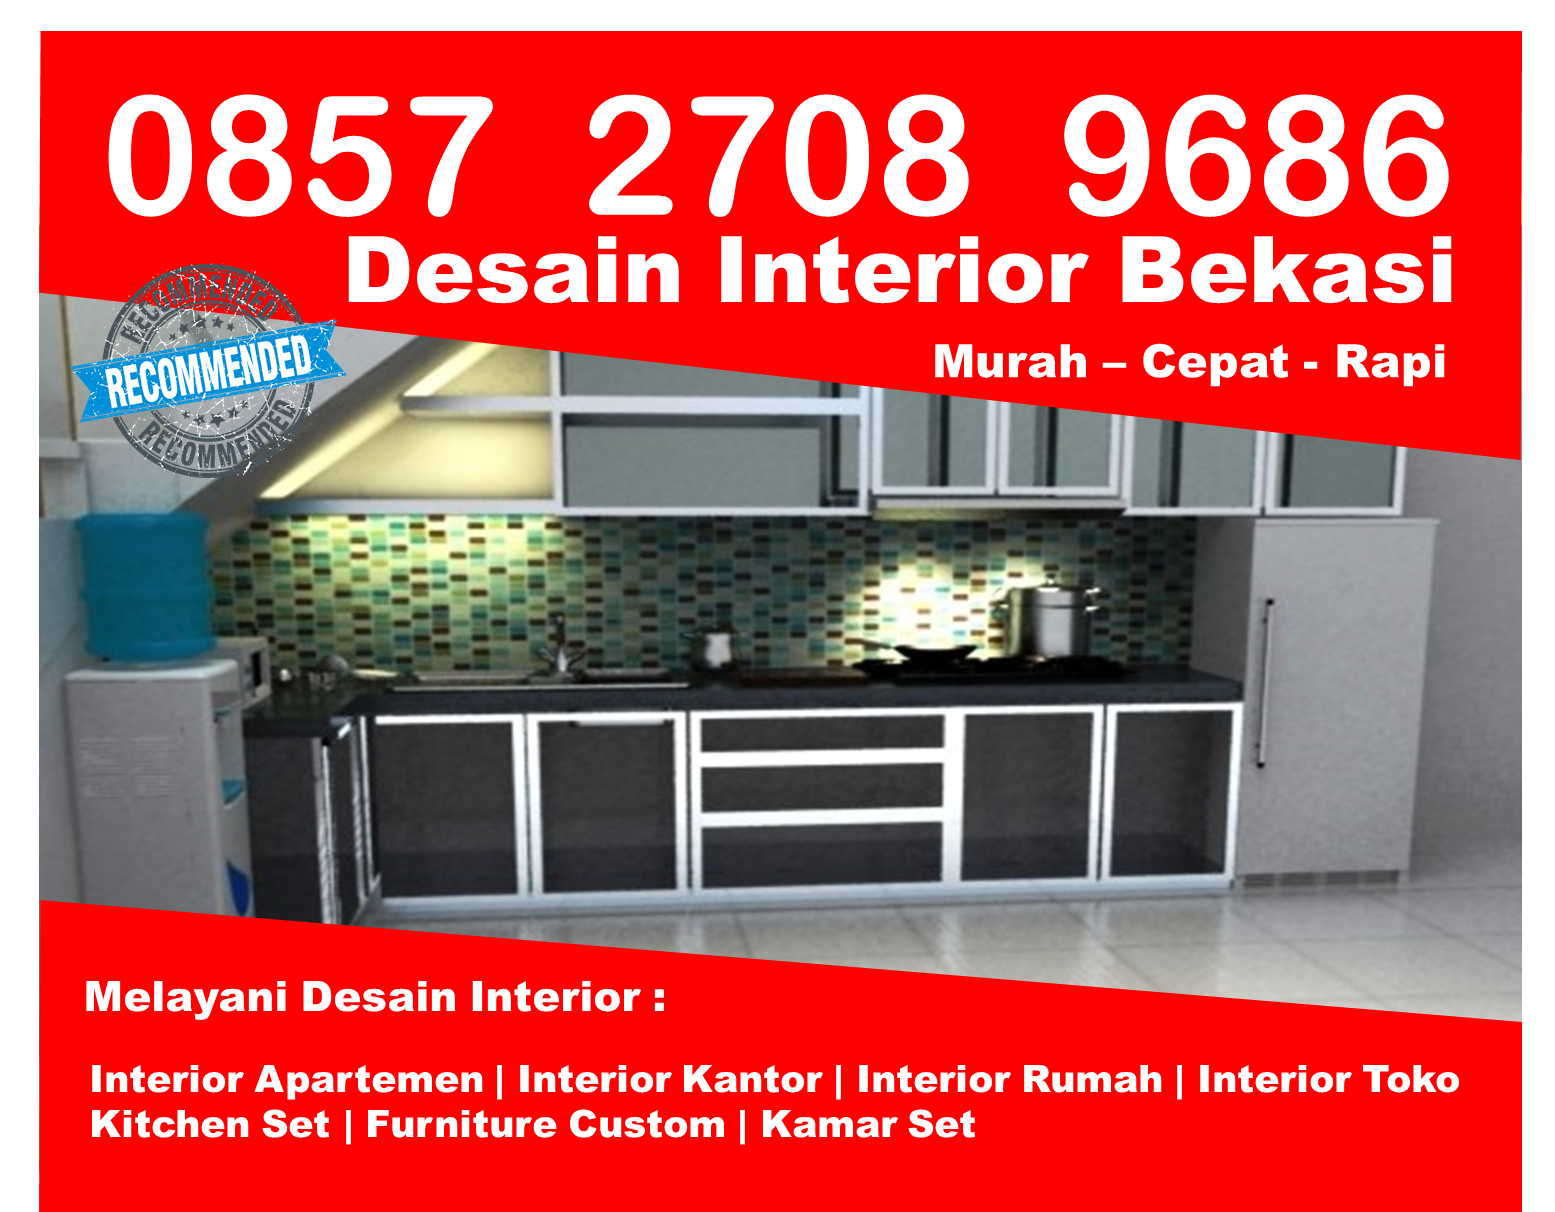 Telp 0857 2708 9686 Indosat Design Interior Apartemen 2 Kamar